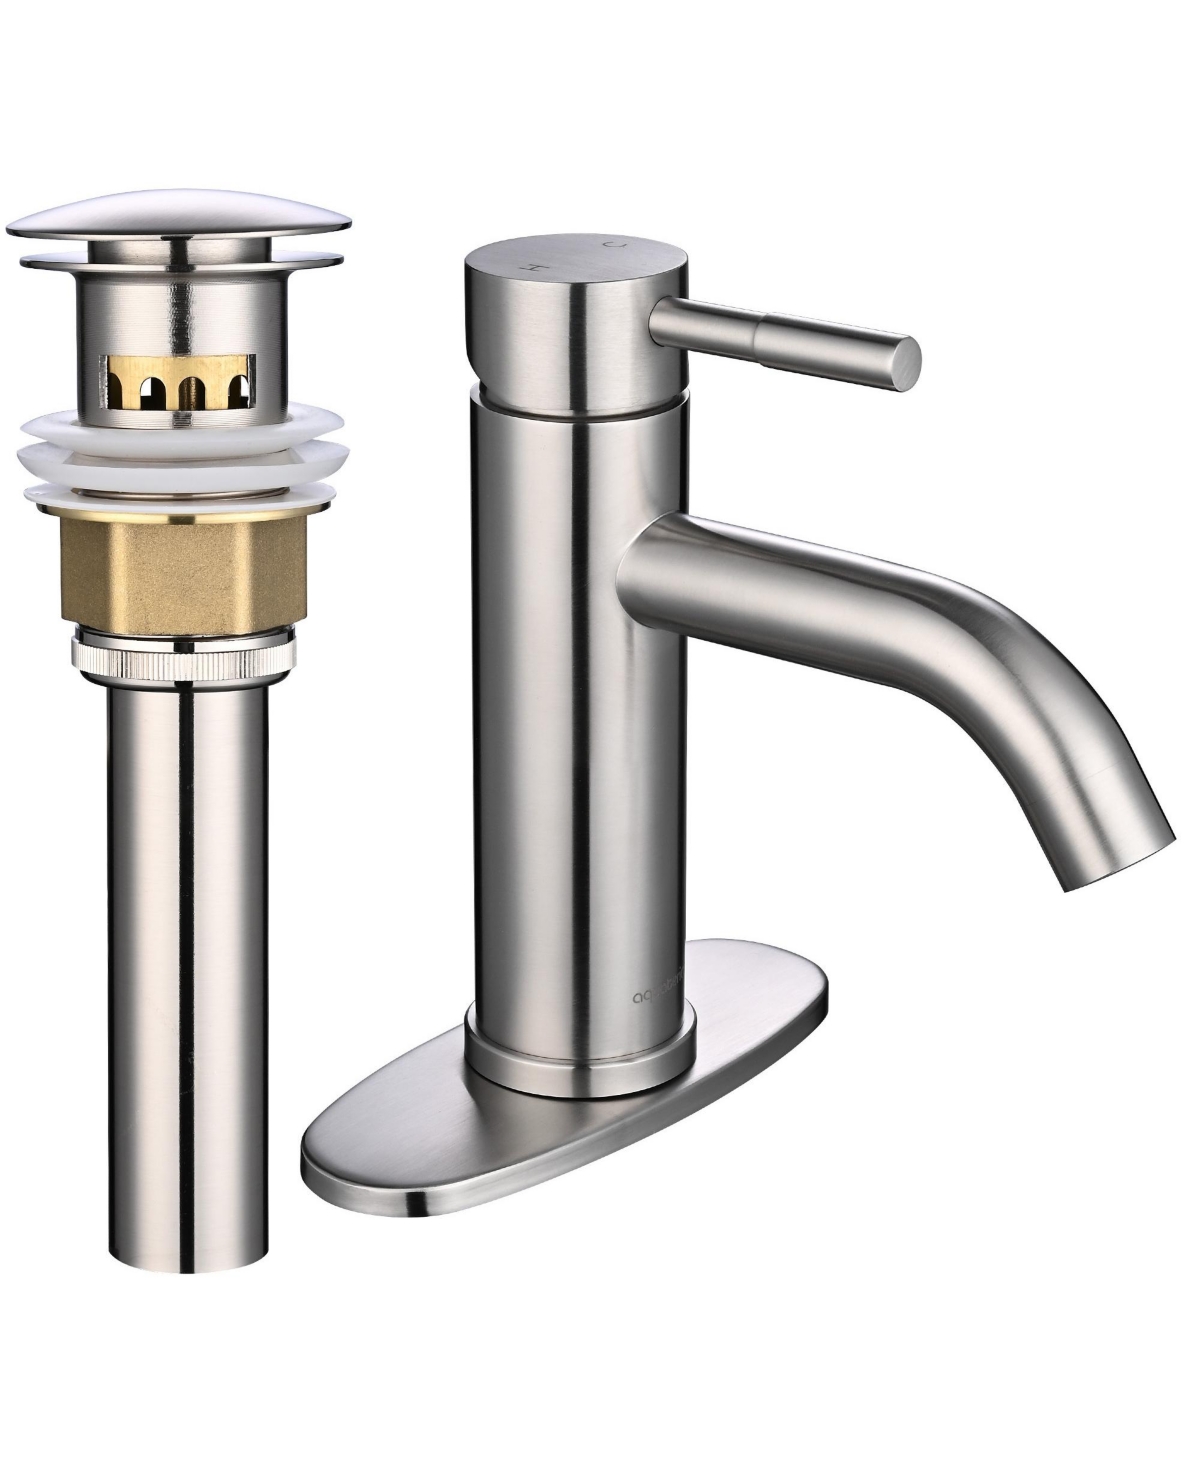 Single Handle Bathroom Vessel Faucet Basin Tap with Pop-up Drain - Silver